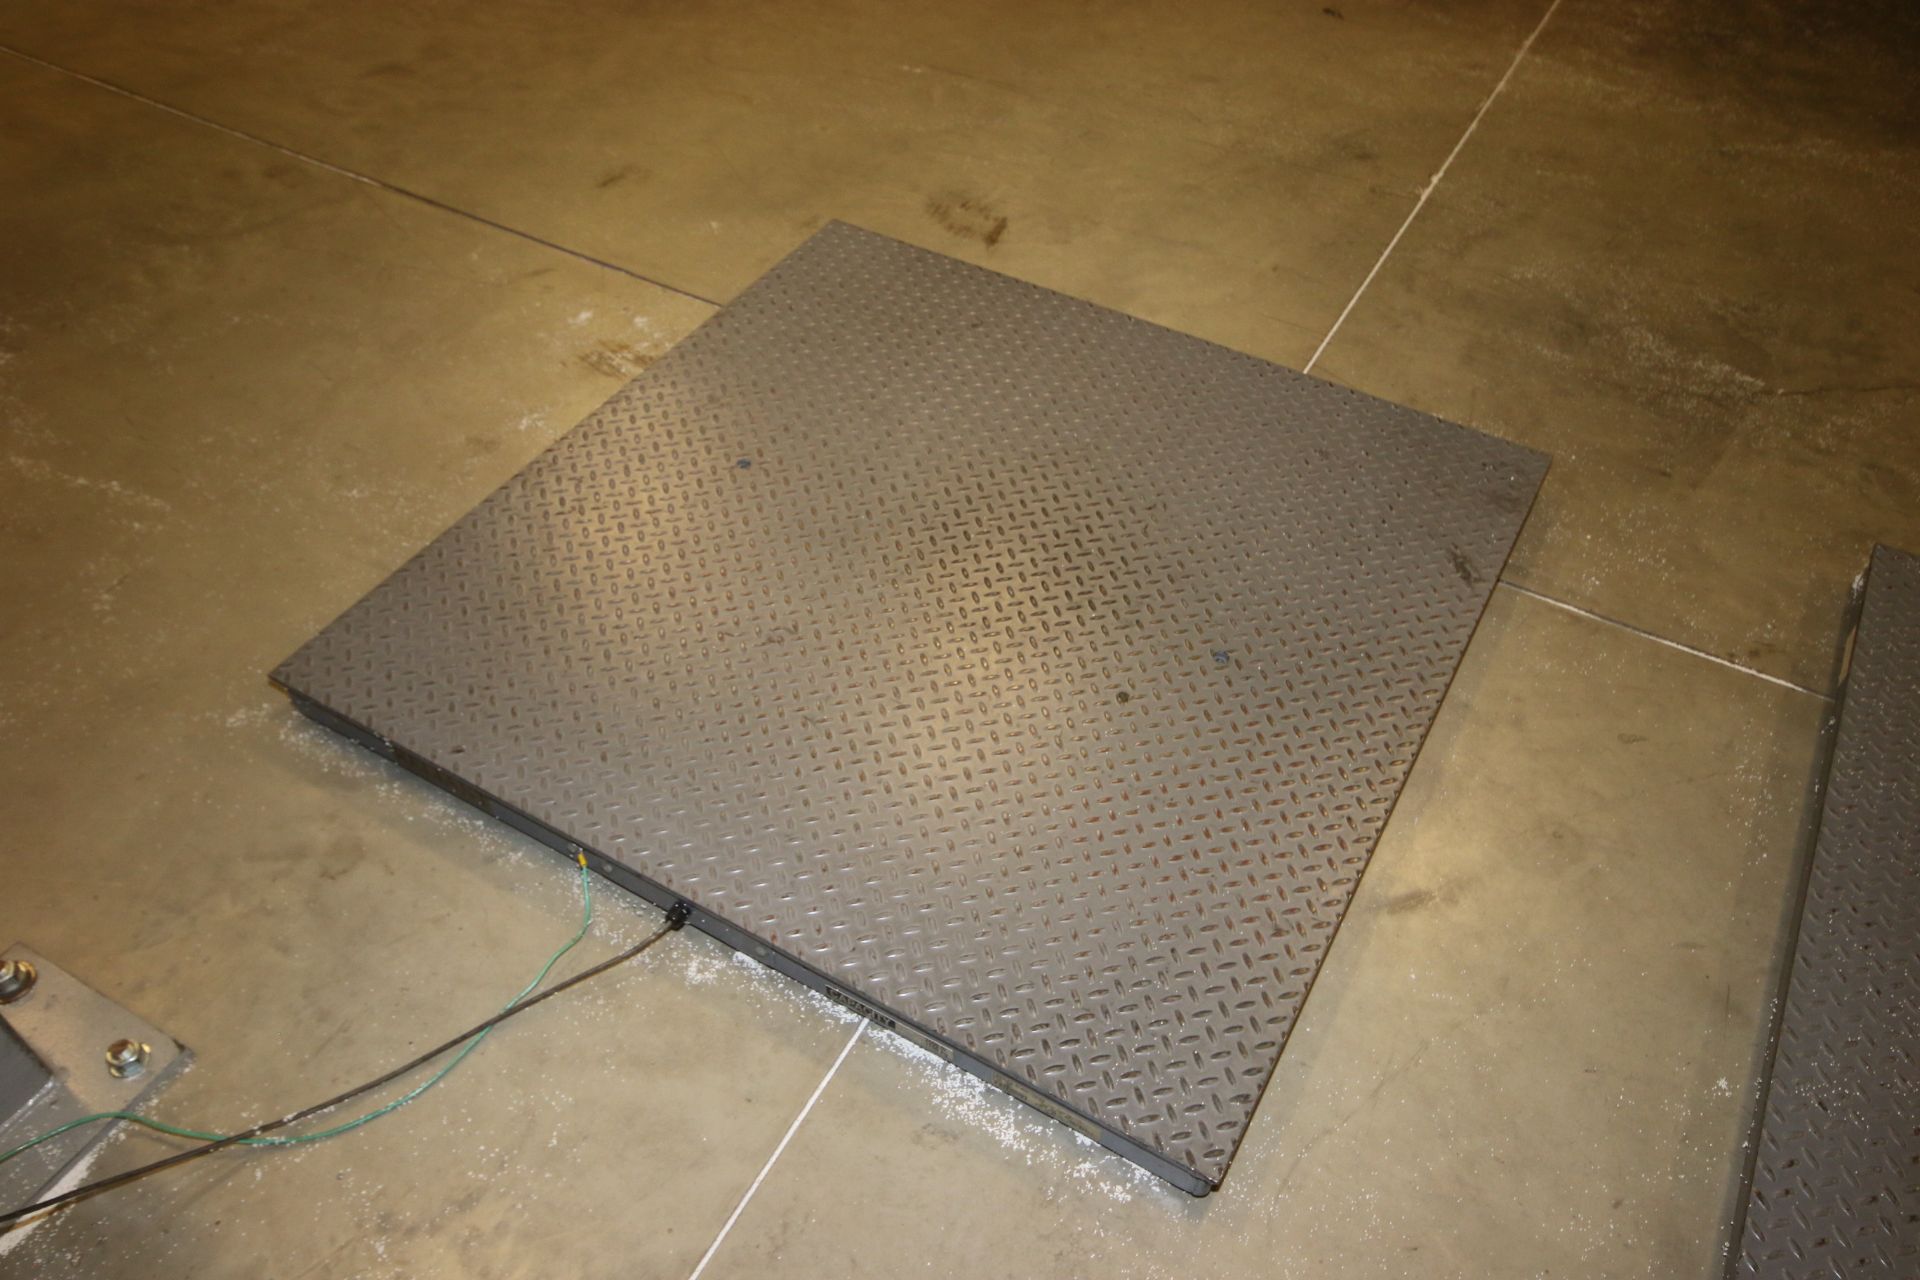 Fairbanks Digital Floor Scale, M/N FB2200, Nominal Capacity 5,000 x 1 lb., with 48" x 48" Floor - Image 3 of 3